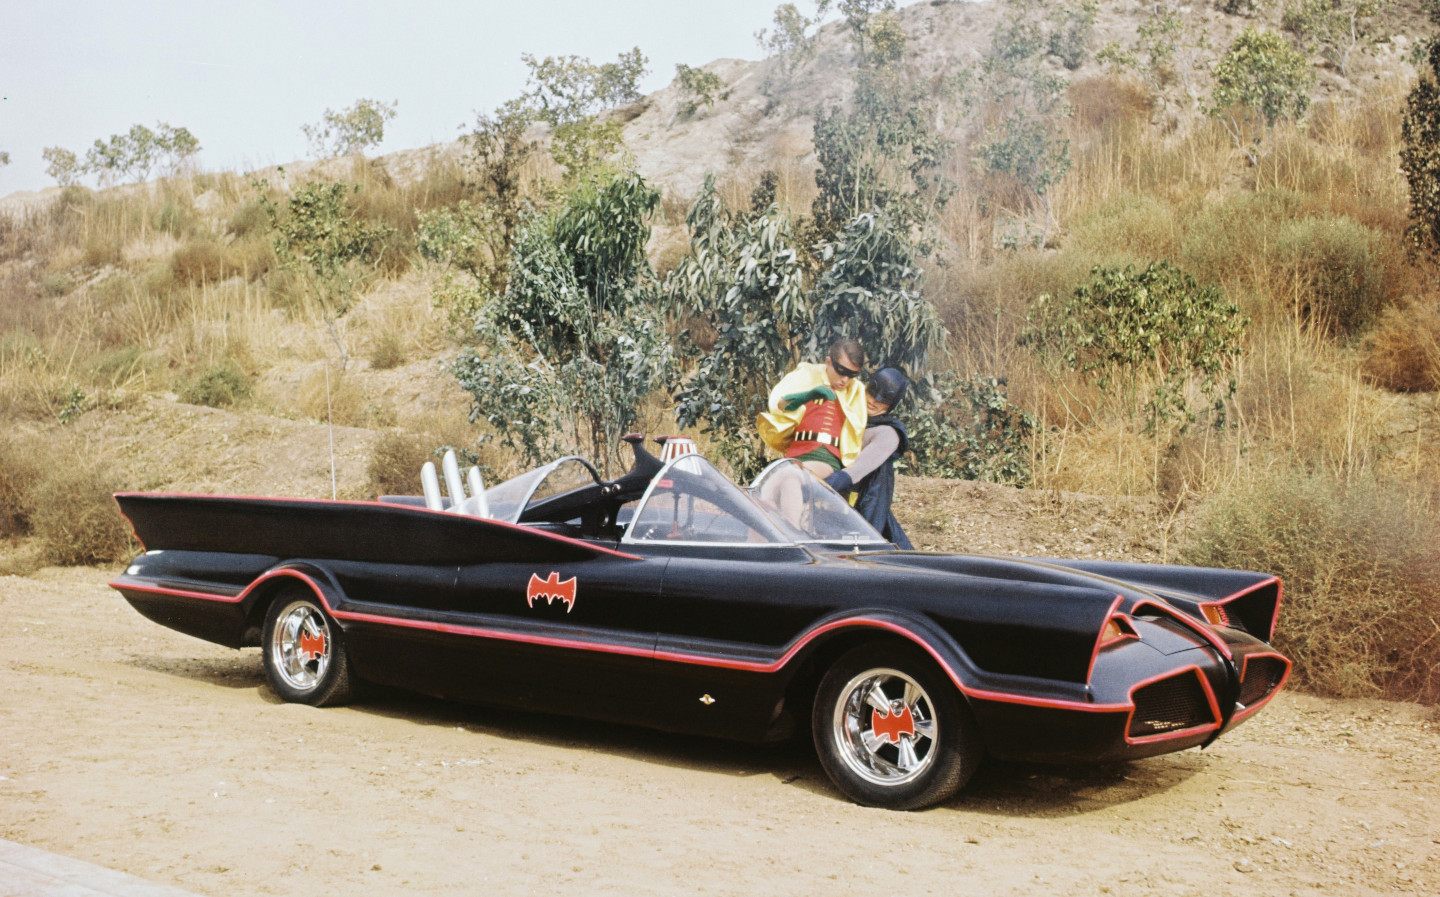 New documentary chronicles the evolution of the Batmobile